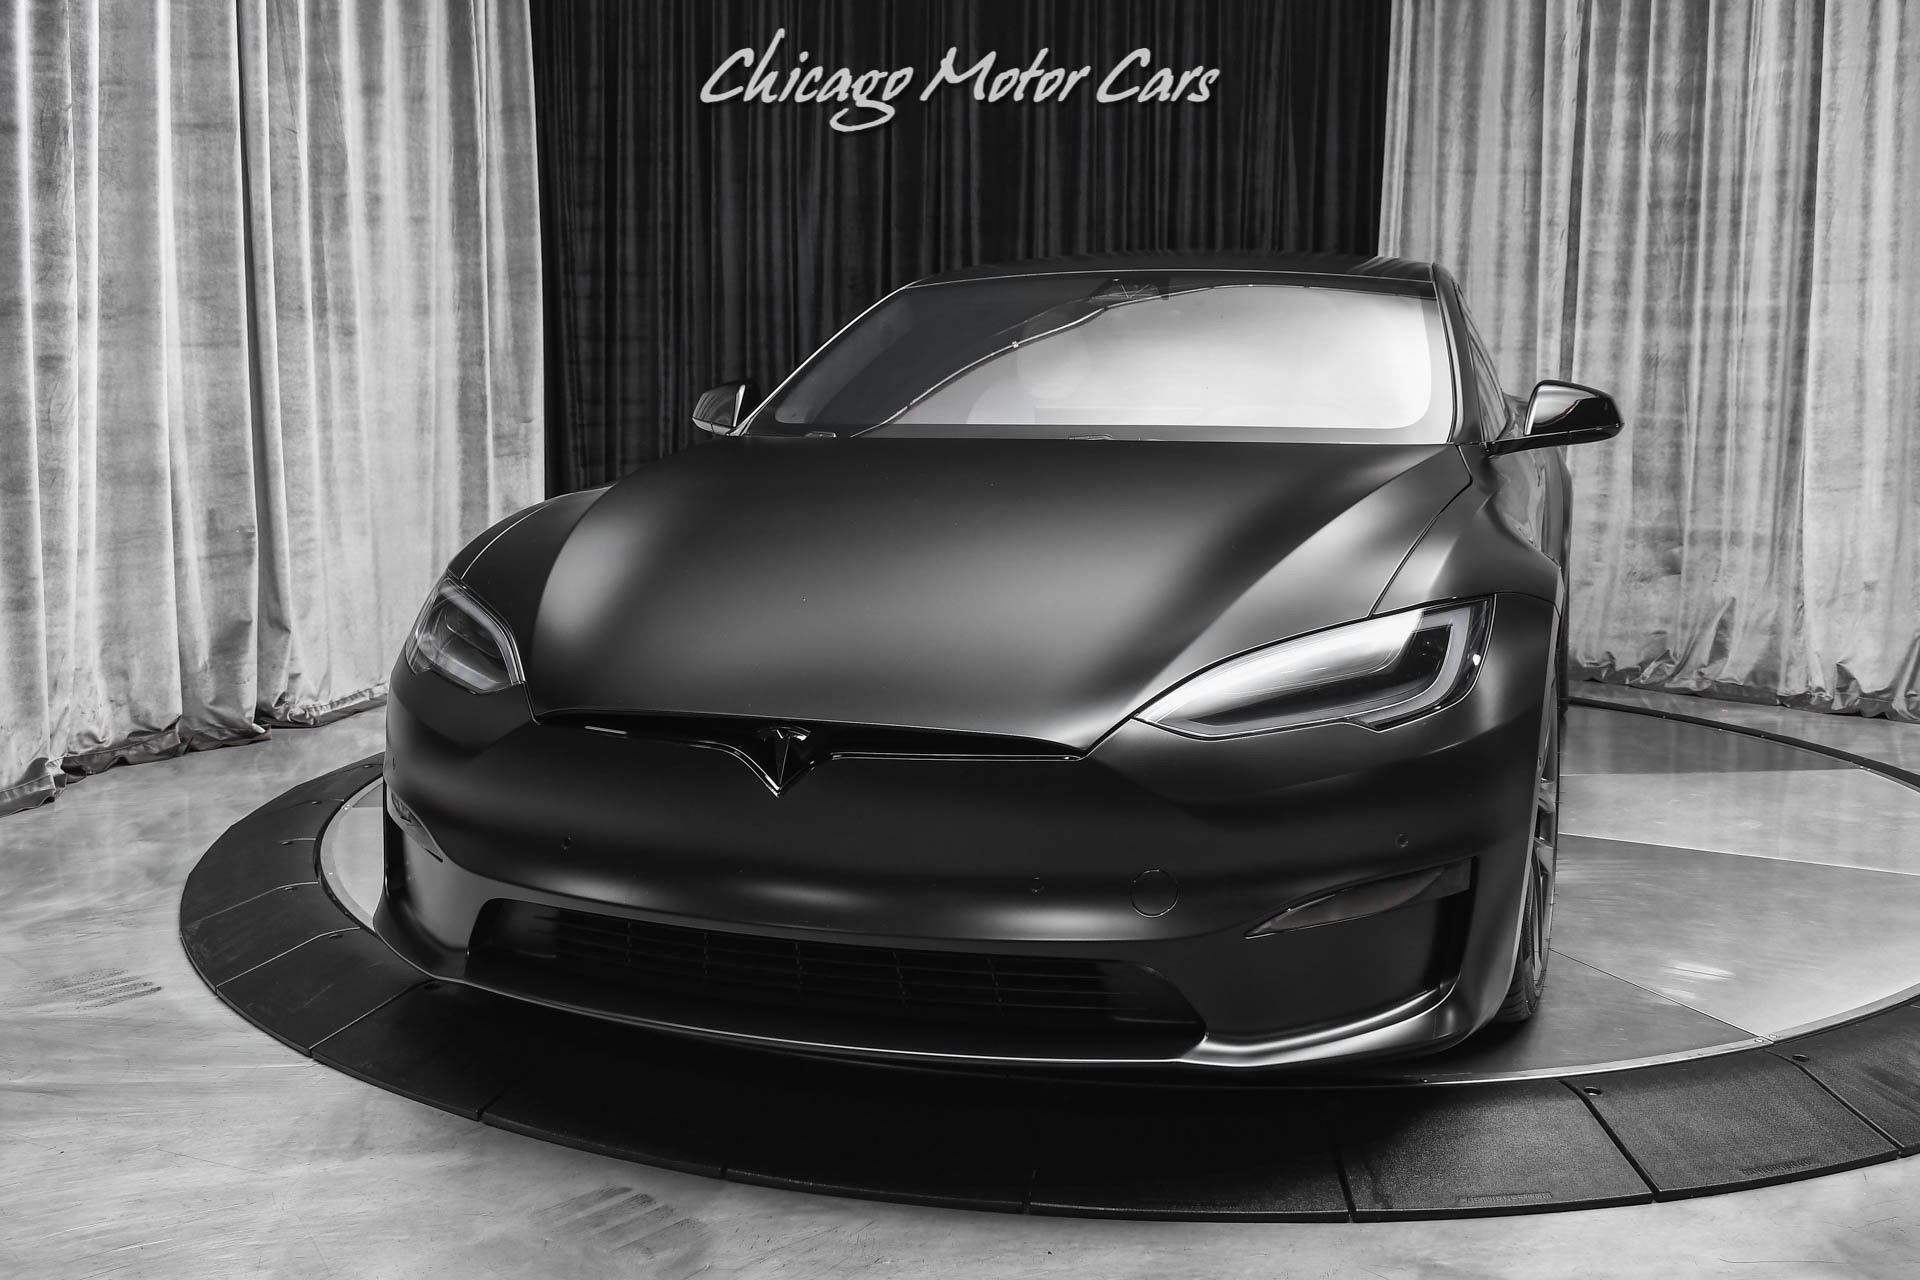 https://www.chicagomotorcars.com/imagetag/9398/2/l/Used-2022-Tesla-Model-S-Plaid-Sedan-SATIN-BLACK--1020-HP-Worlds-Fastest-Production-Sedan-EVER.jpg